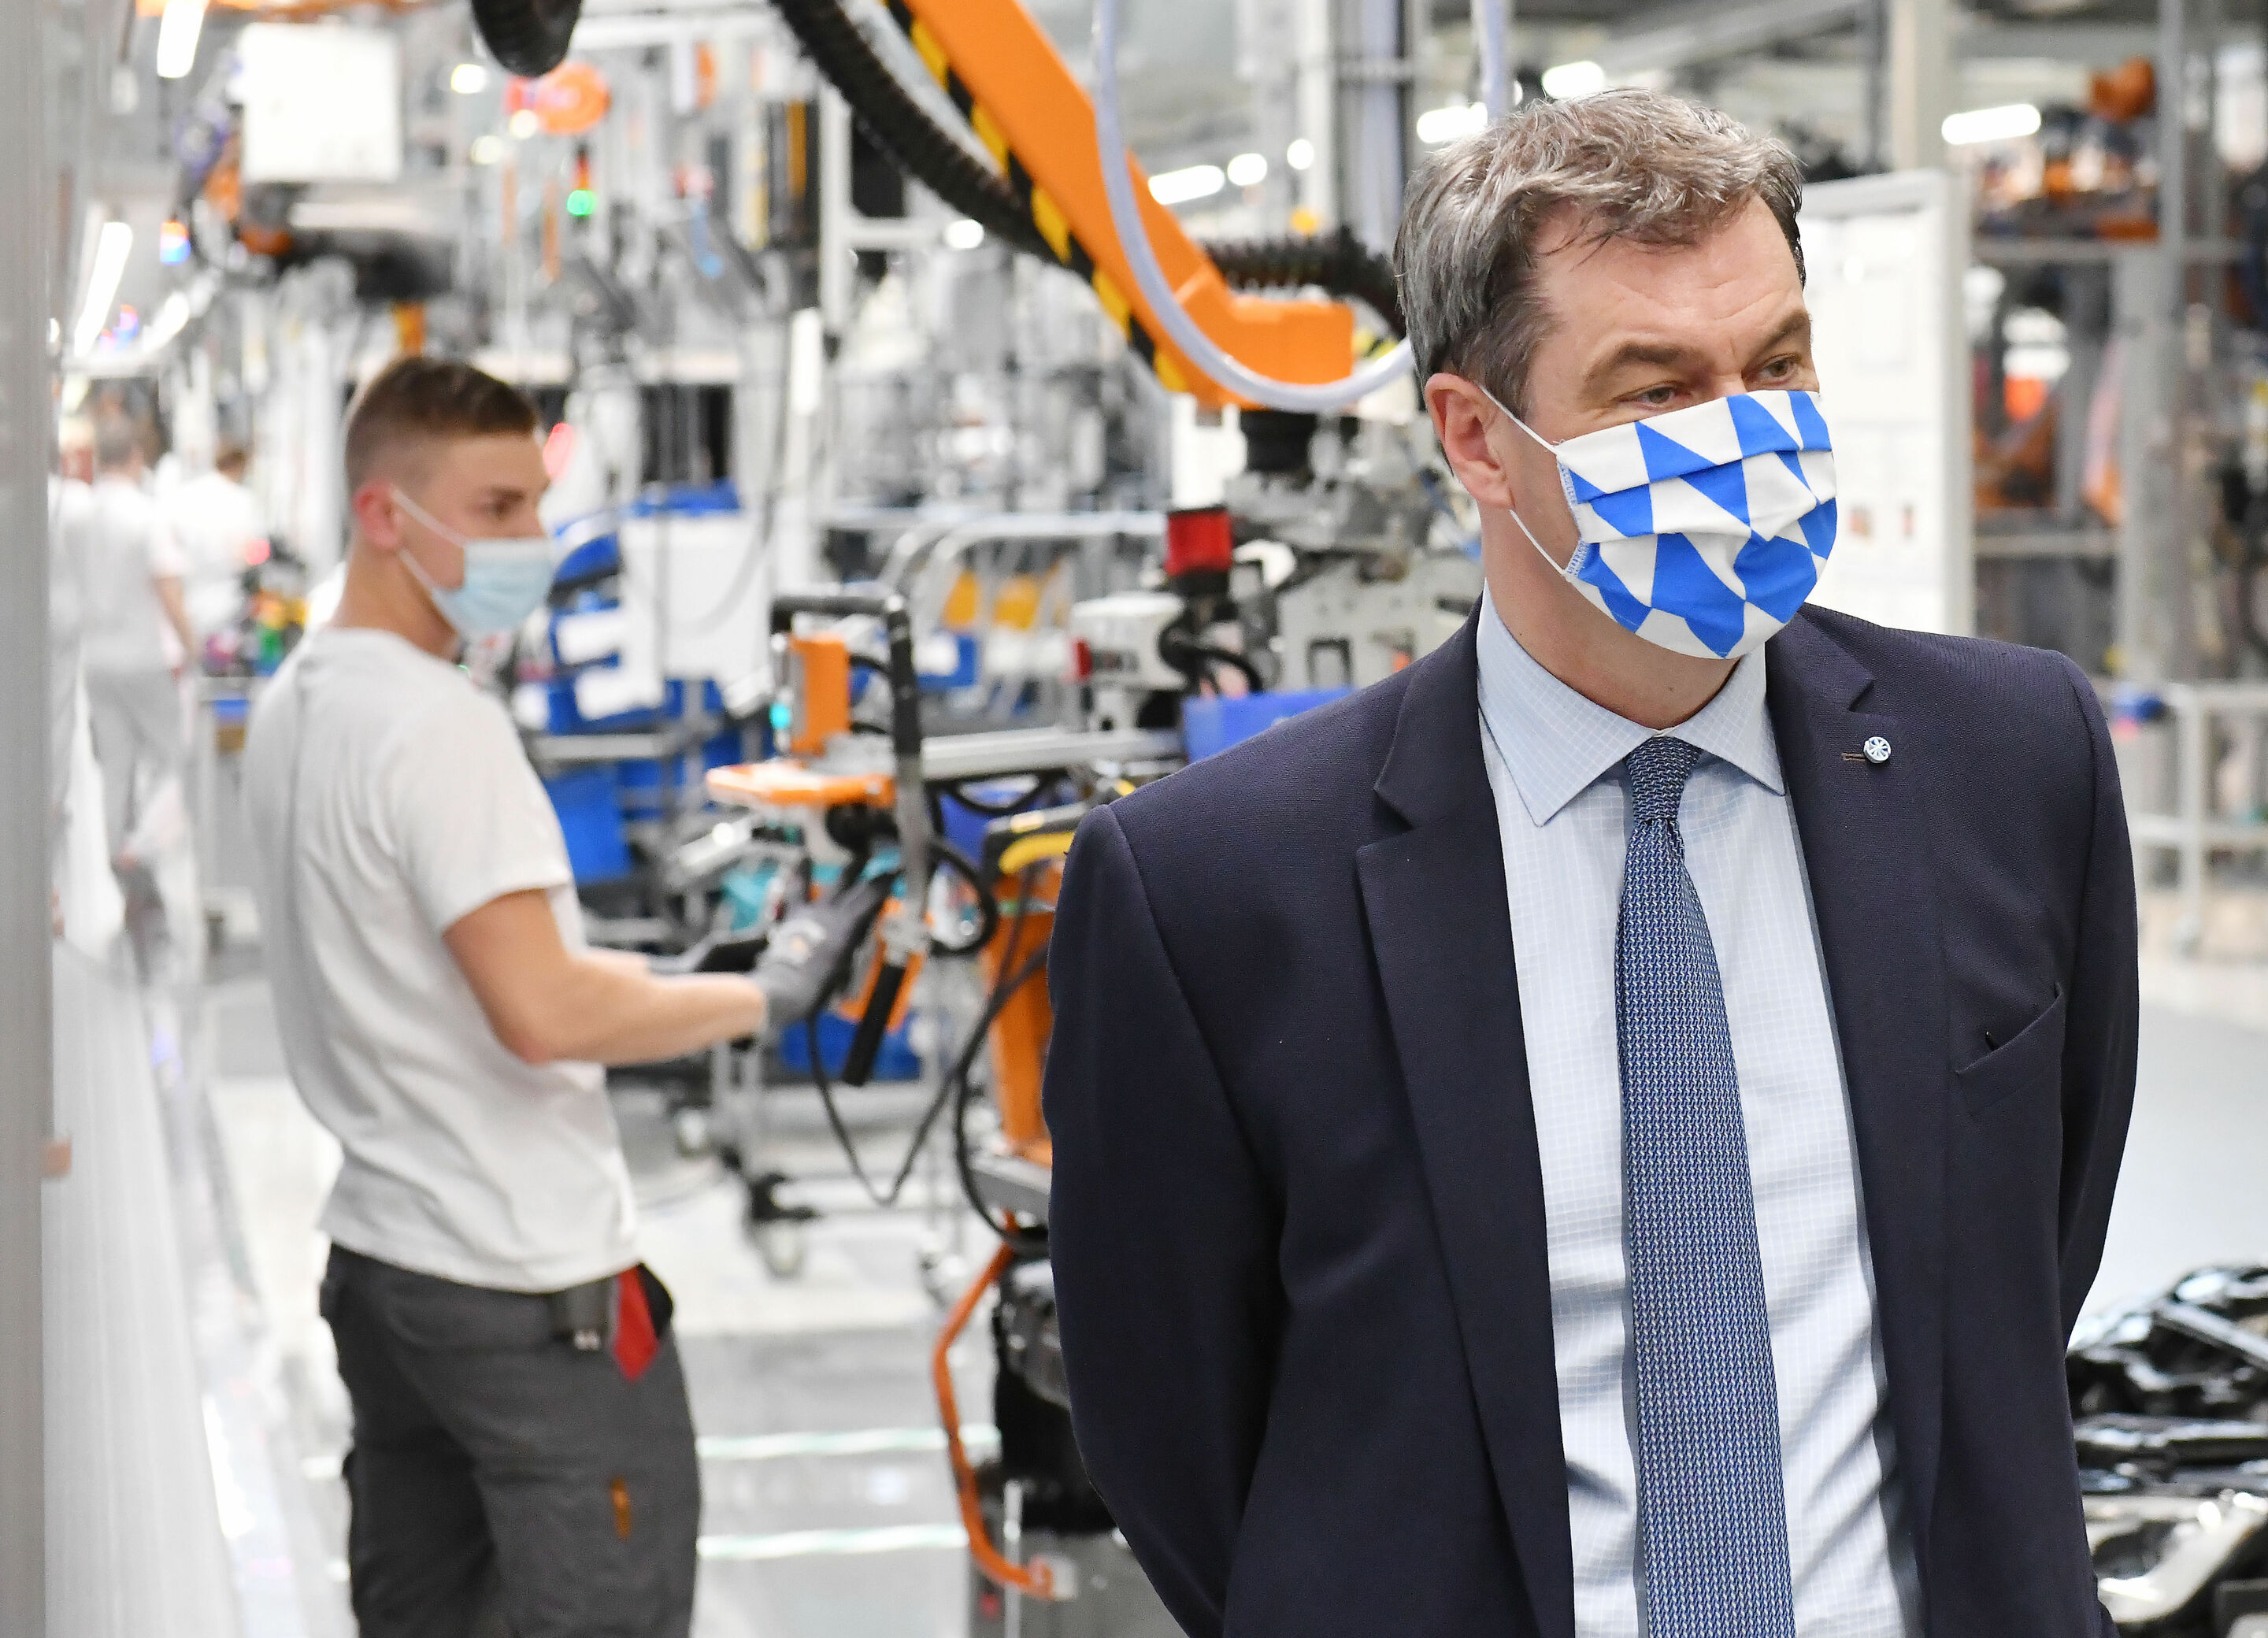 Markus Söder Visits Audi: Bavaria’s Minister President Impressed with Protective Measures